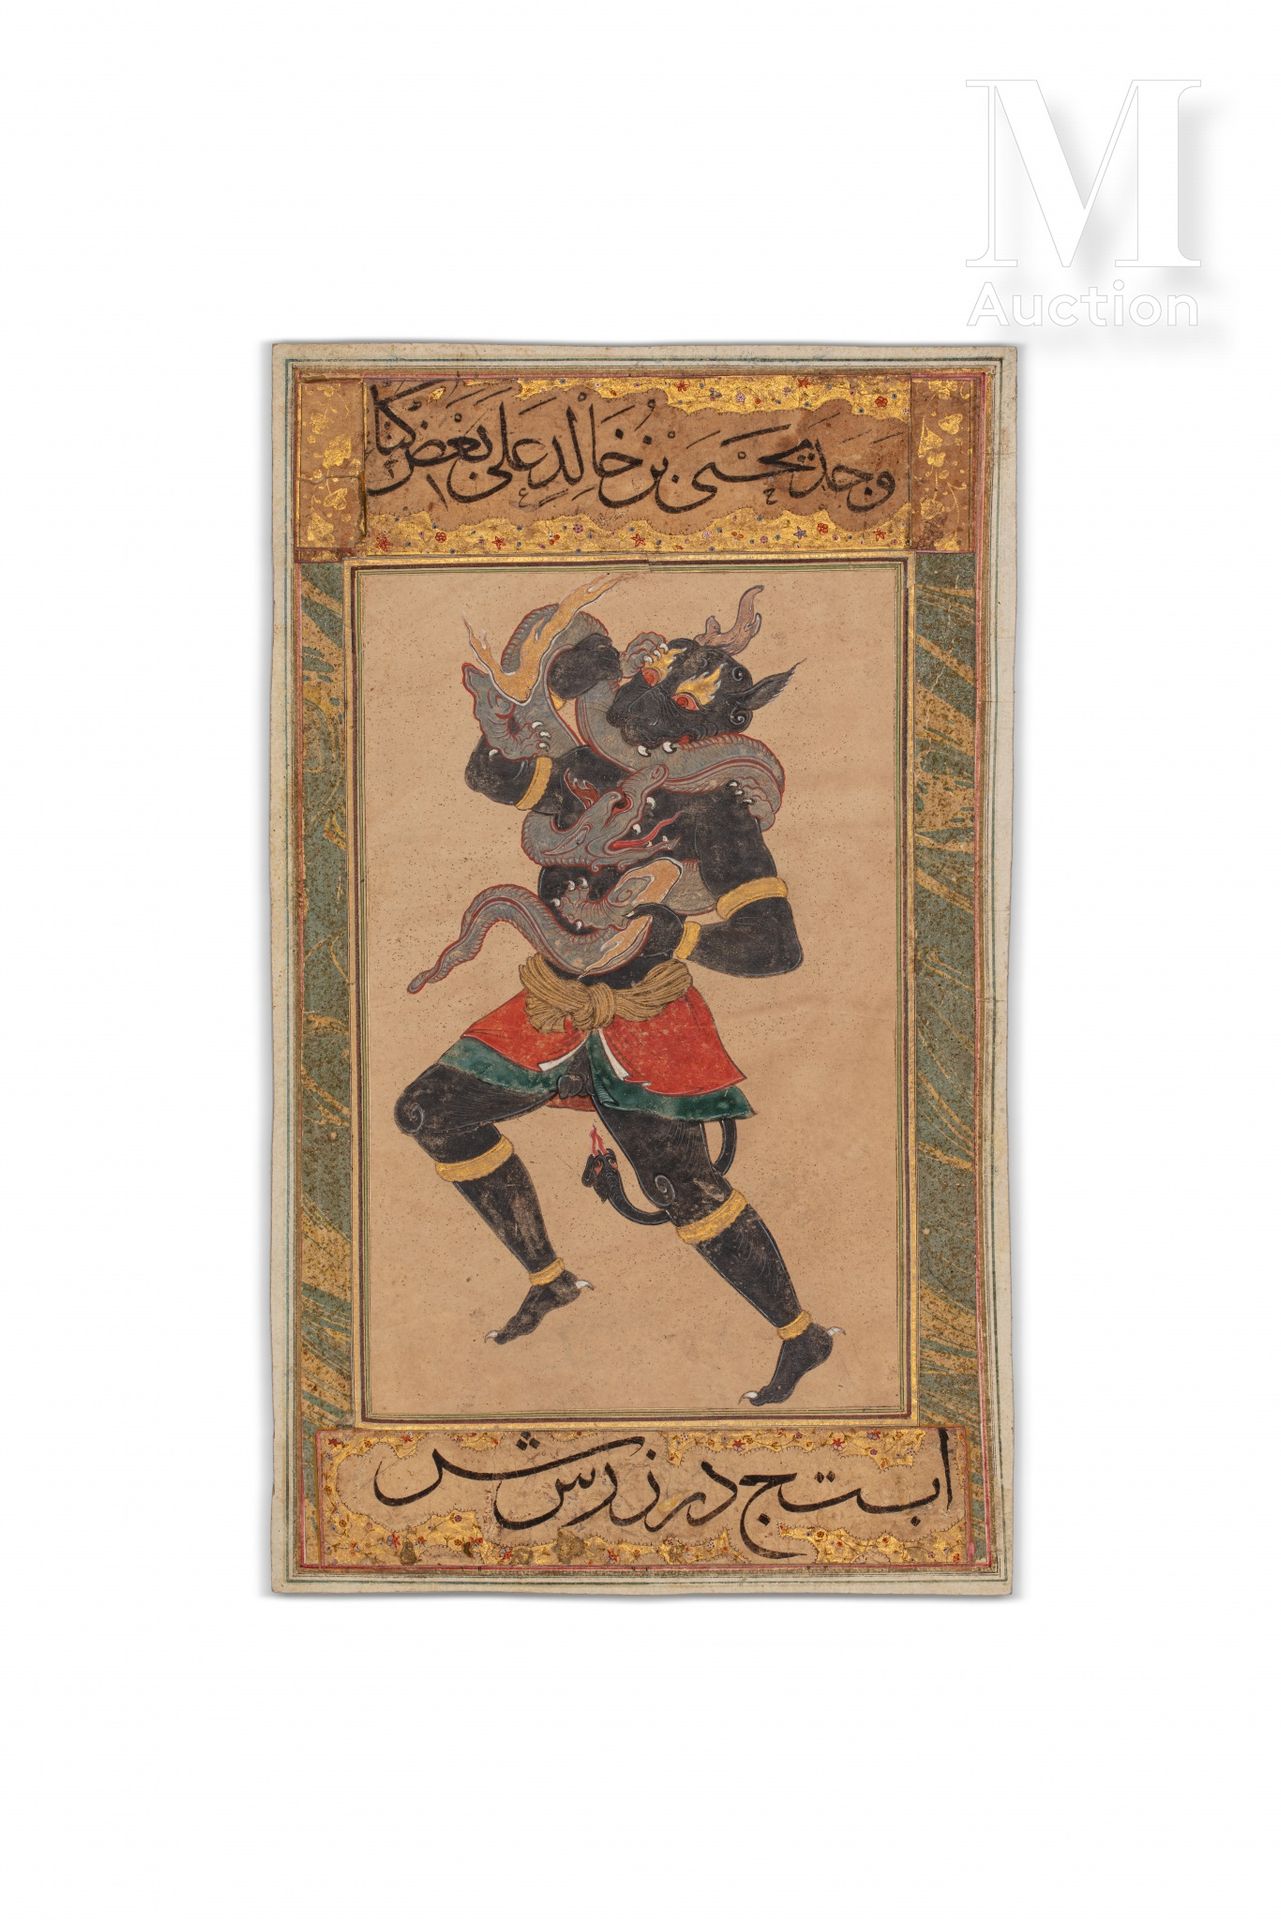 Combat du démon et du dragon Iran, in the style of Siyah Qalam, 19th century

Go&hellip;